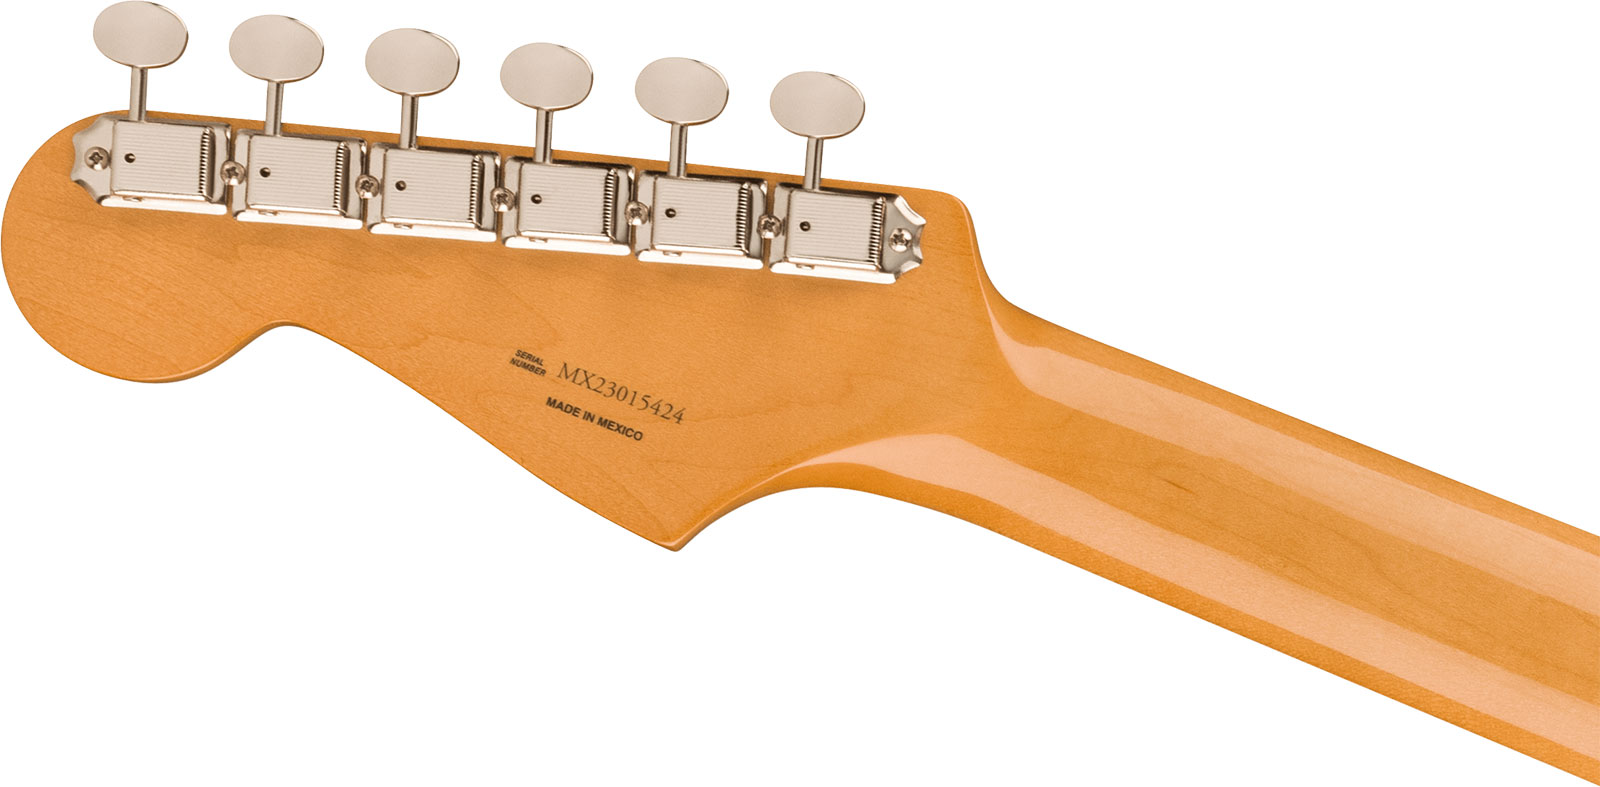 Fender Strat 60s Vintera 2 Mex 3s Trem Rw - Olympic White - Str shape electric guitar - Variation 3